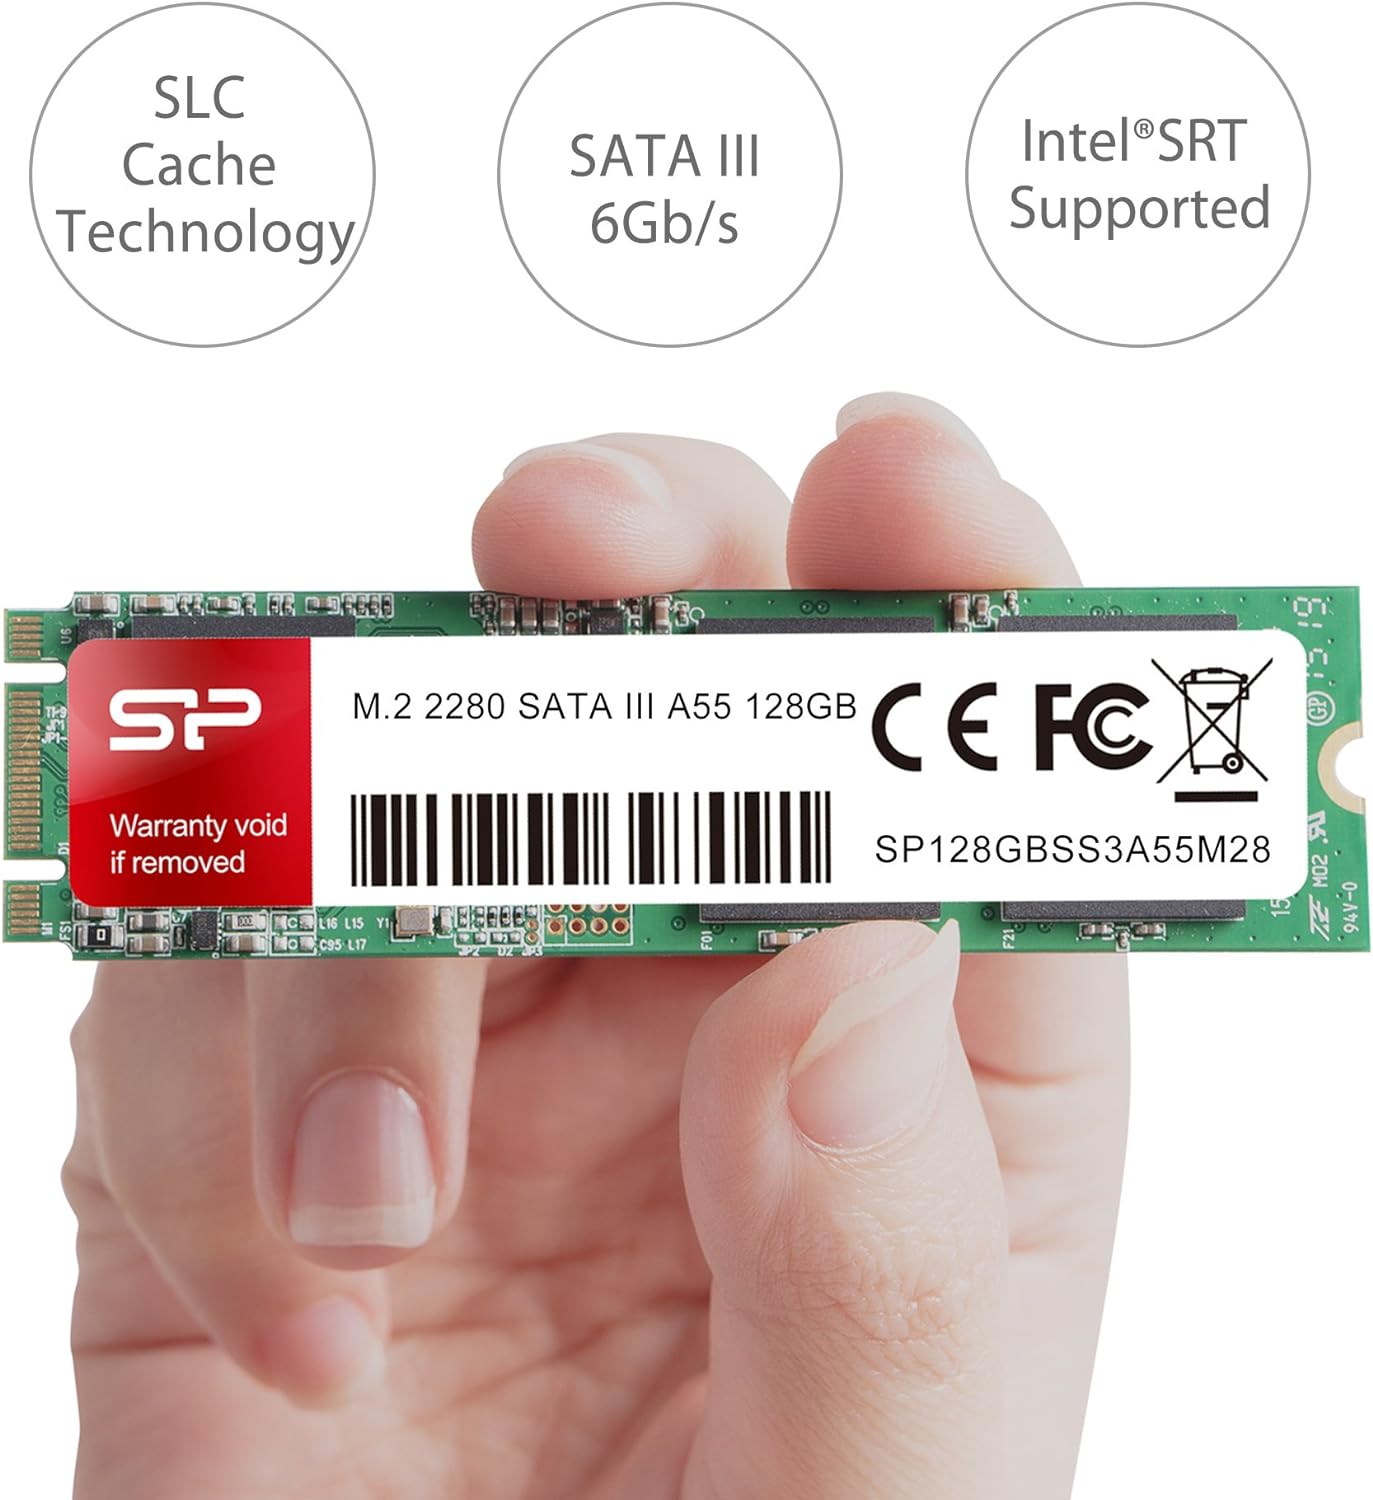 Silicon Power 1TB A55 M.2 SSD SATA III Internal Solid State Drive 2280 SU001TBSS3A55M28AB